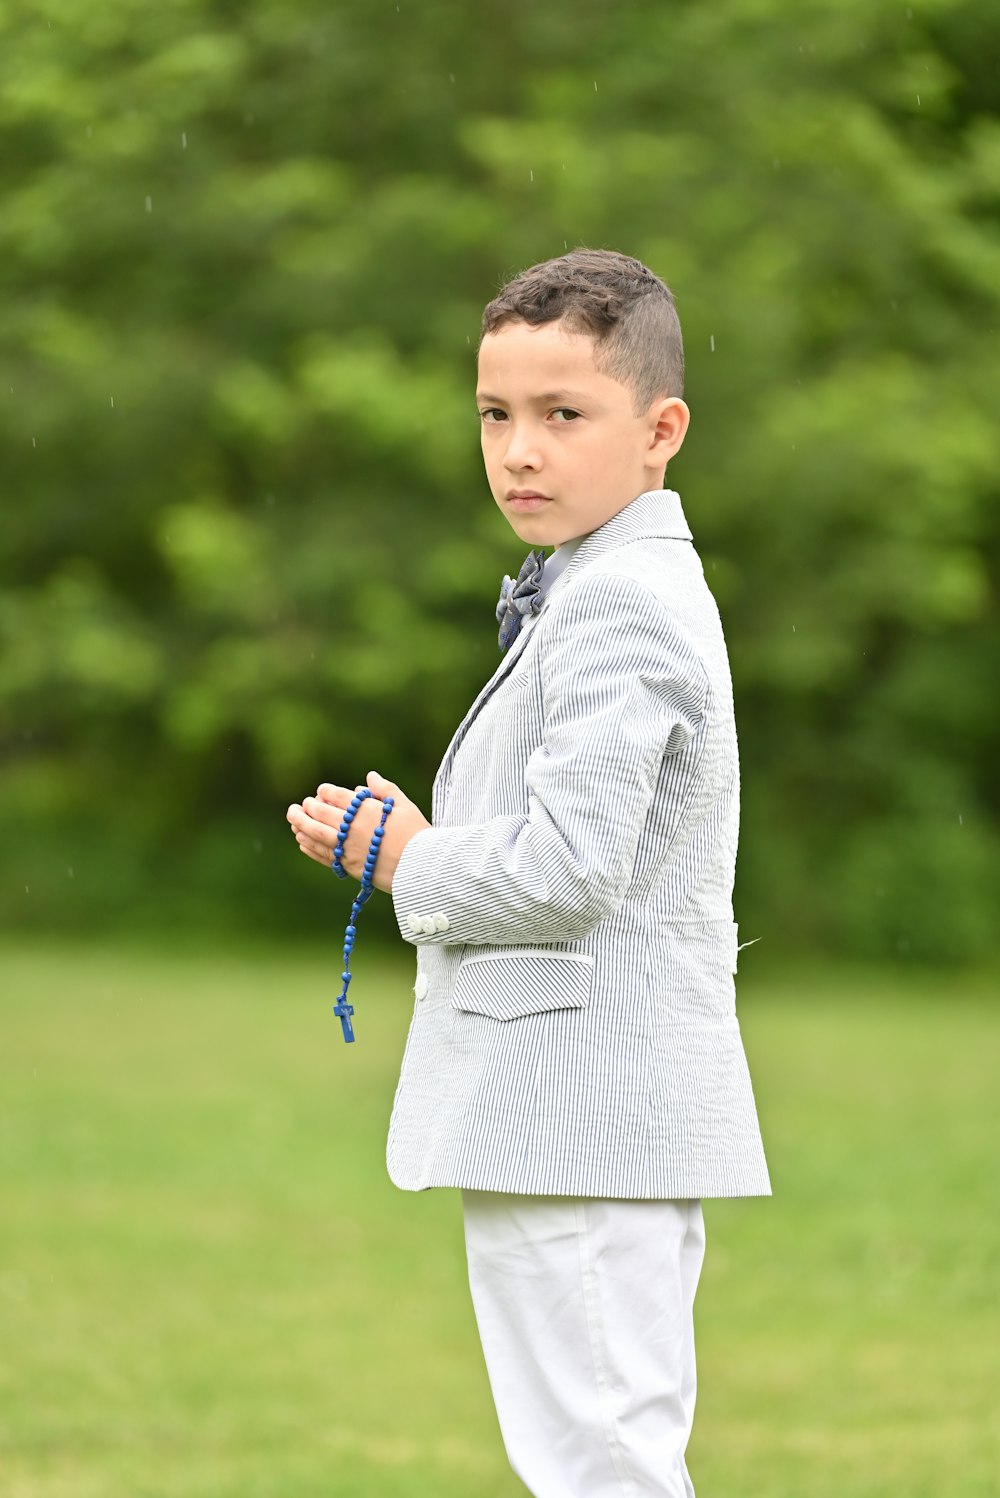 a boy holding a blue string